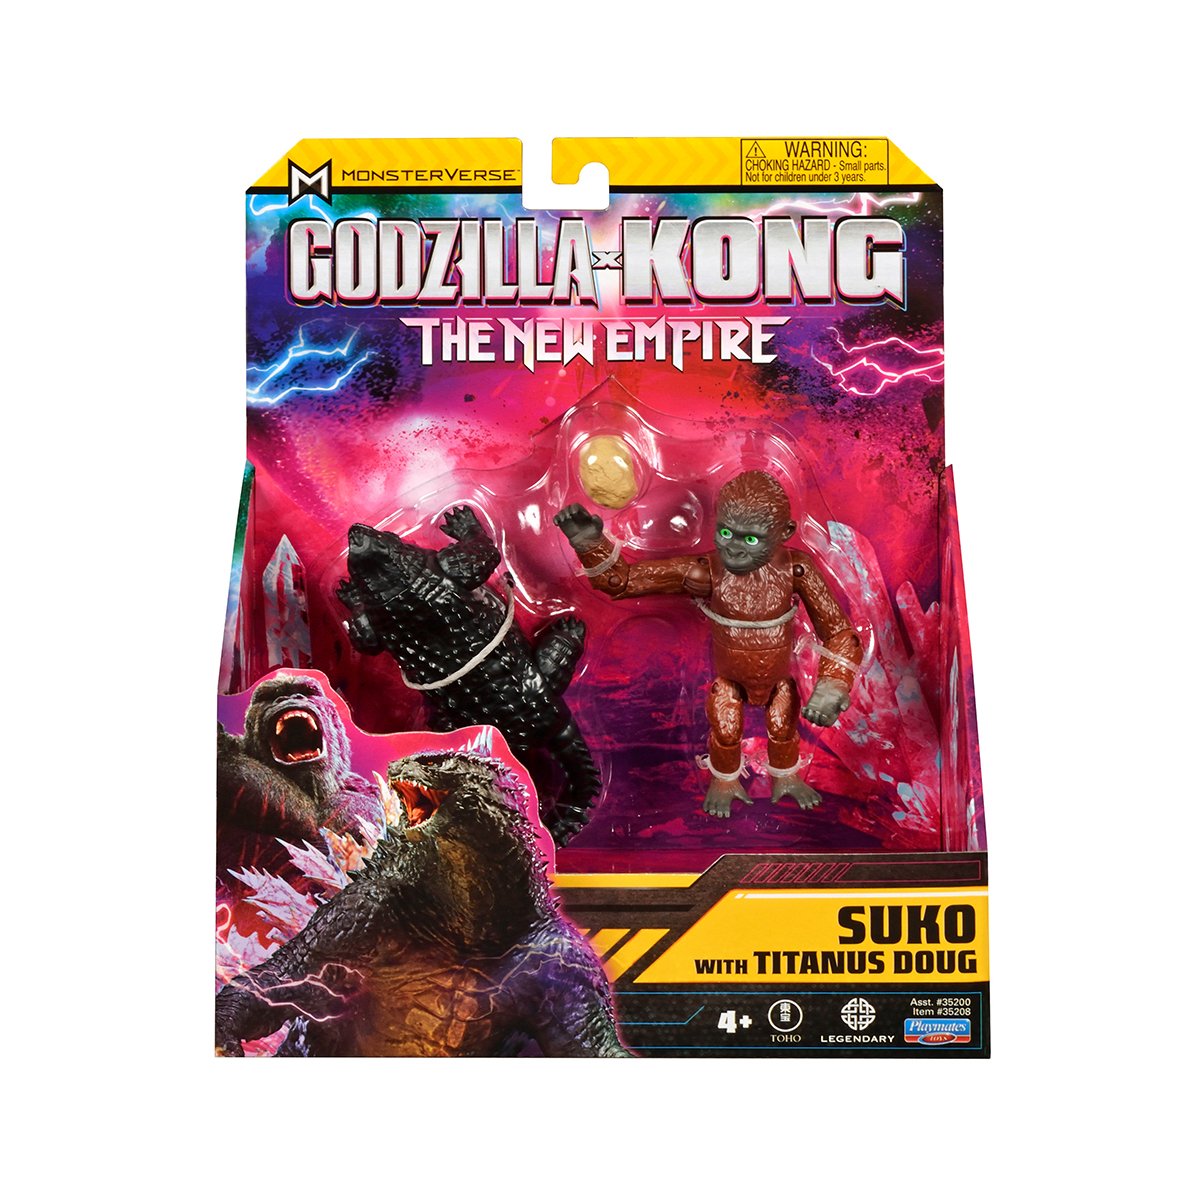 Набор фигурок Godzilla vs Kong Зуко с Дагом 9 см (35208) - фото 3